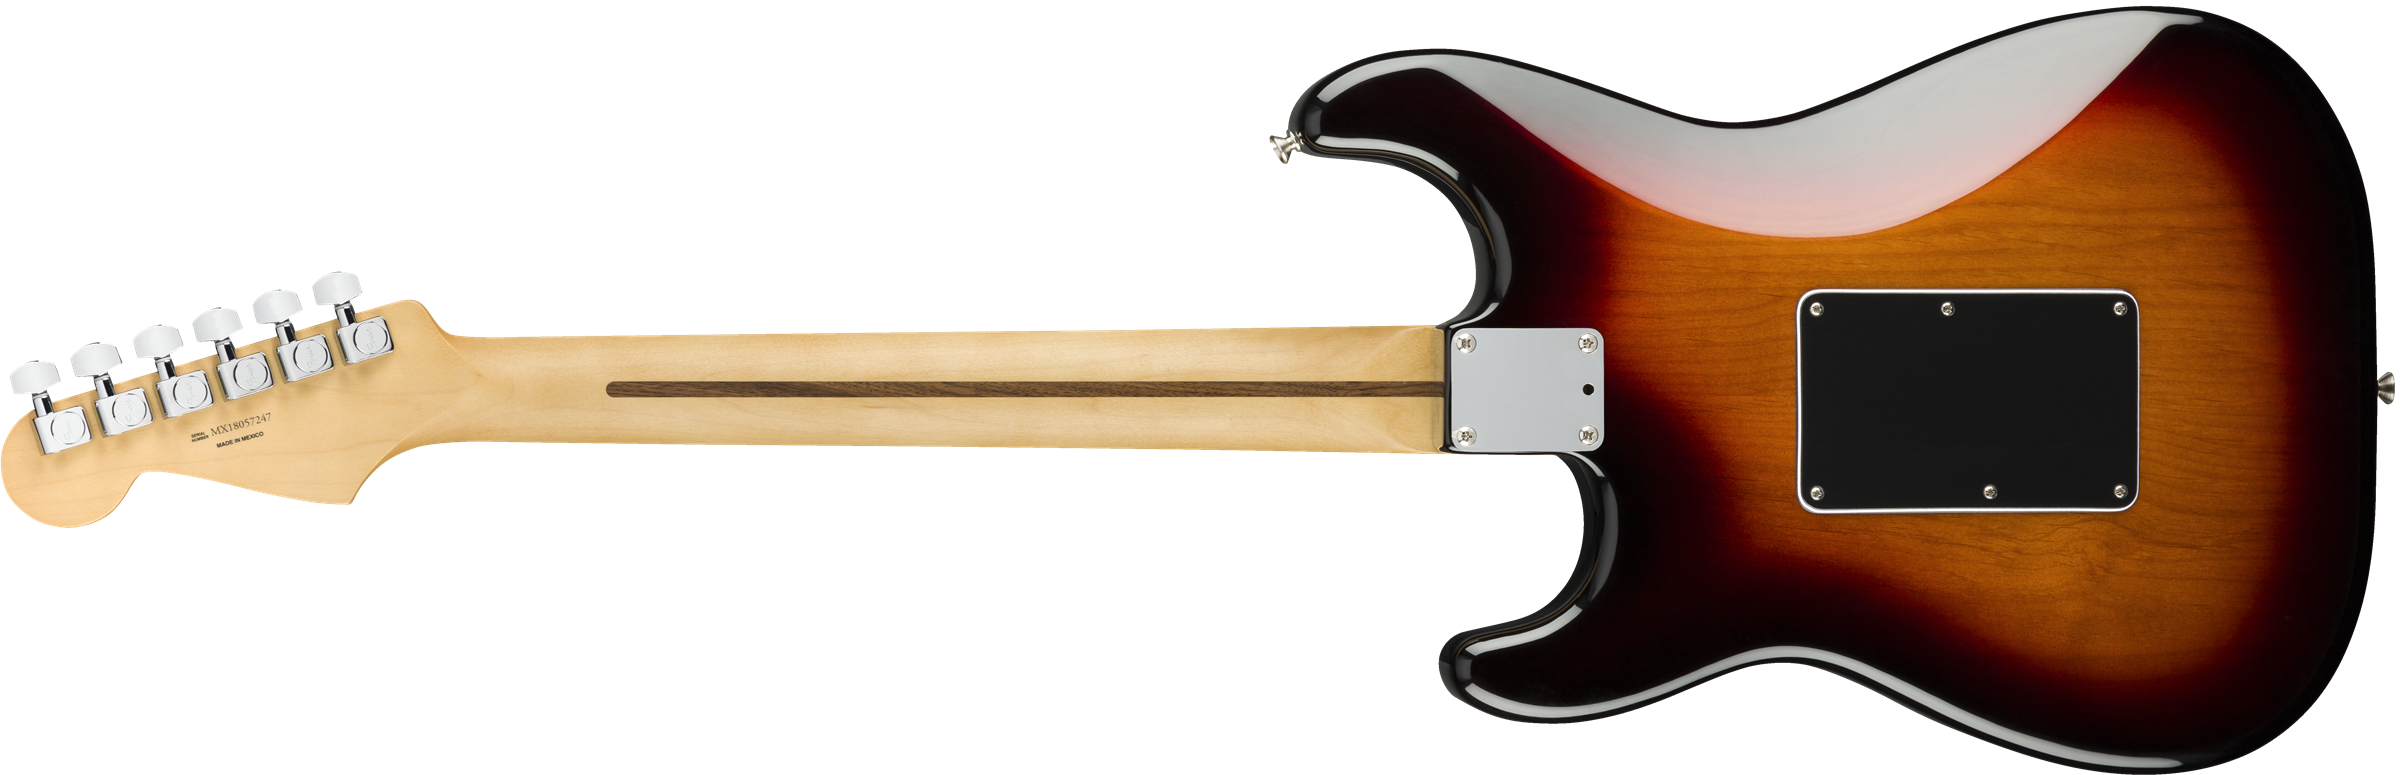 Fender Strat Player Floyd Rose Mex Hss Fr Pf - 3-color Sunburst - Guitarra eléctrica con forma de str. - Variation 1